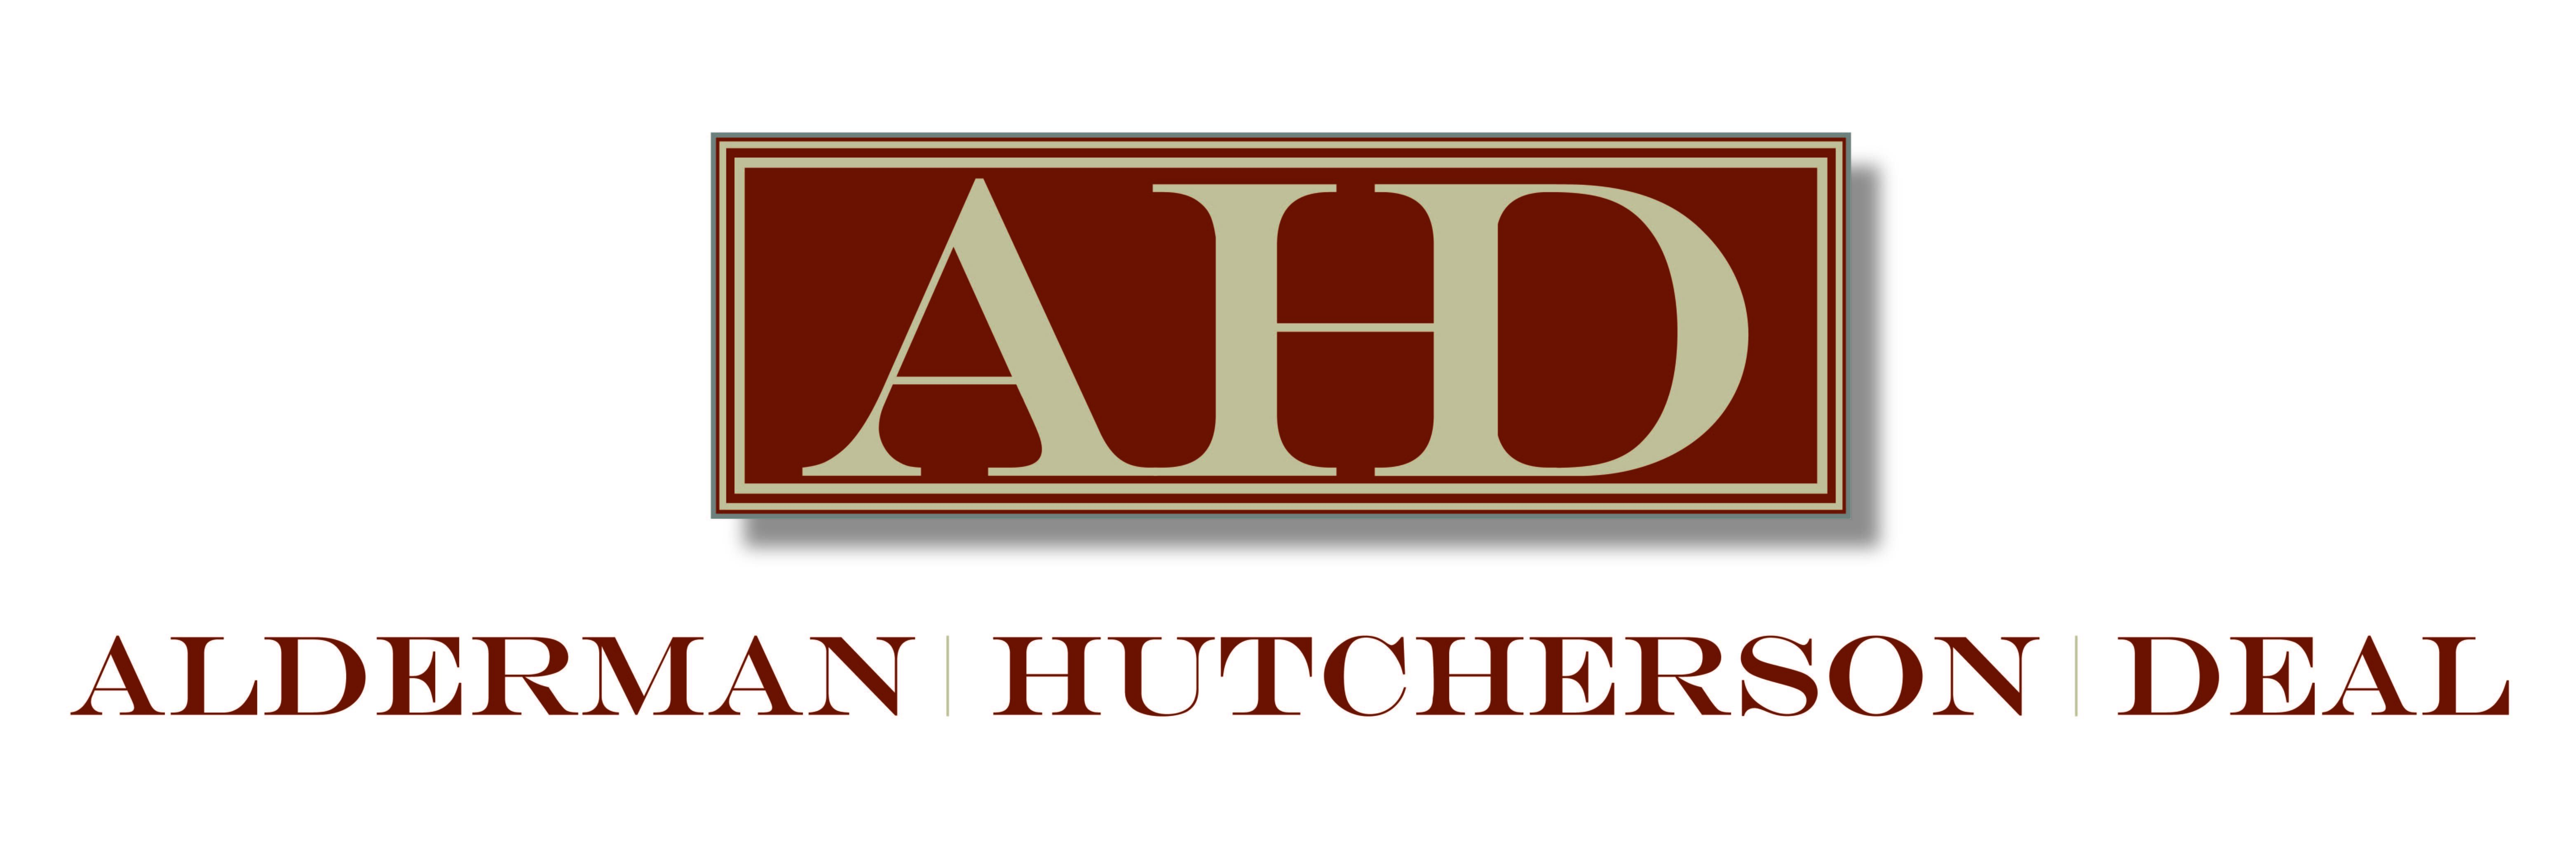 Alderman Hutcherson Deal